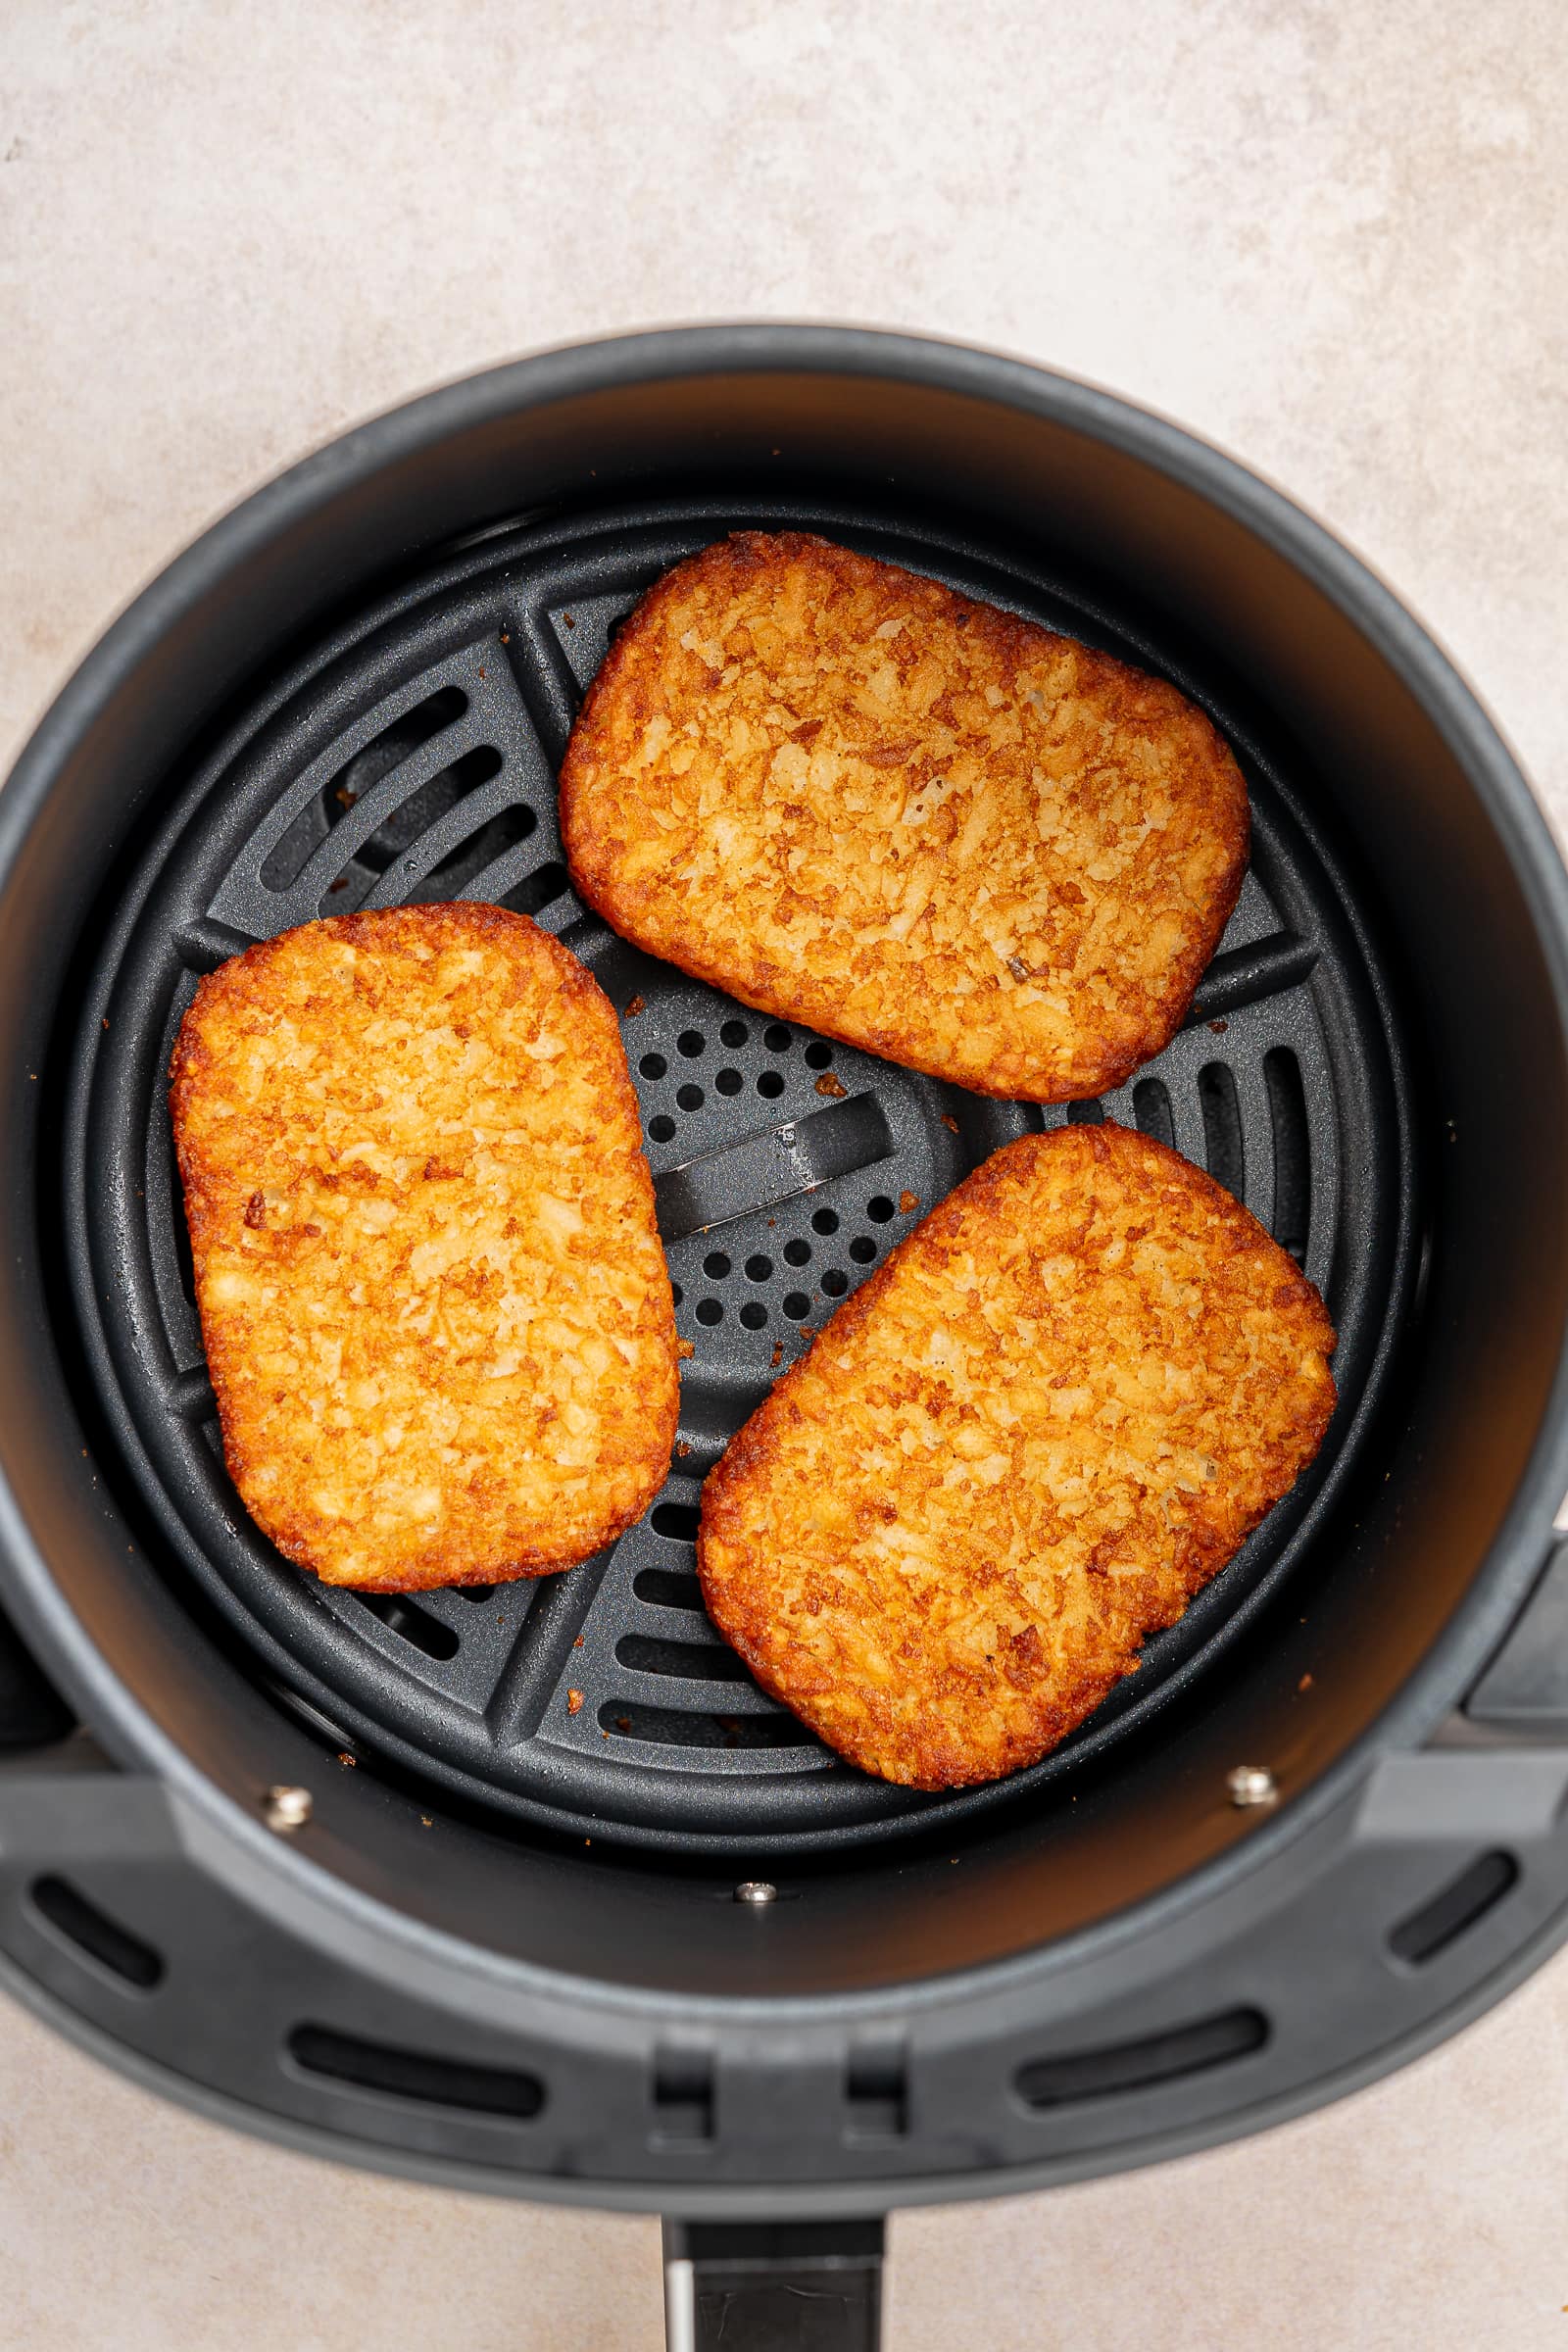 Crispy, golden air-fried hash browns in an air fryer basket.